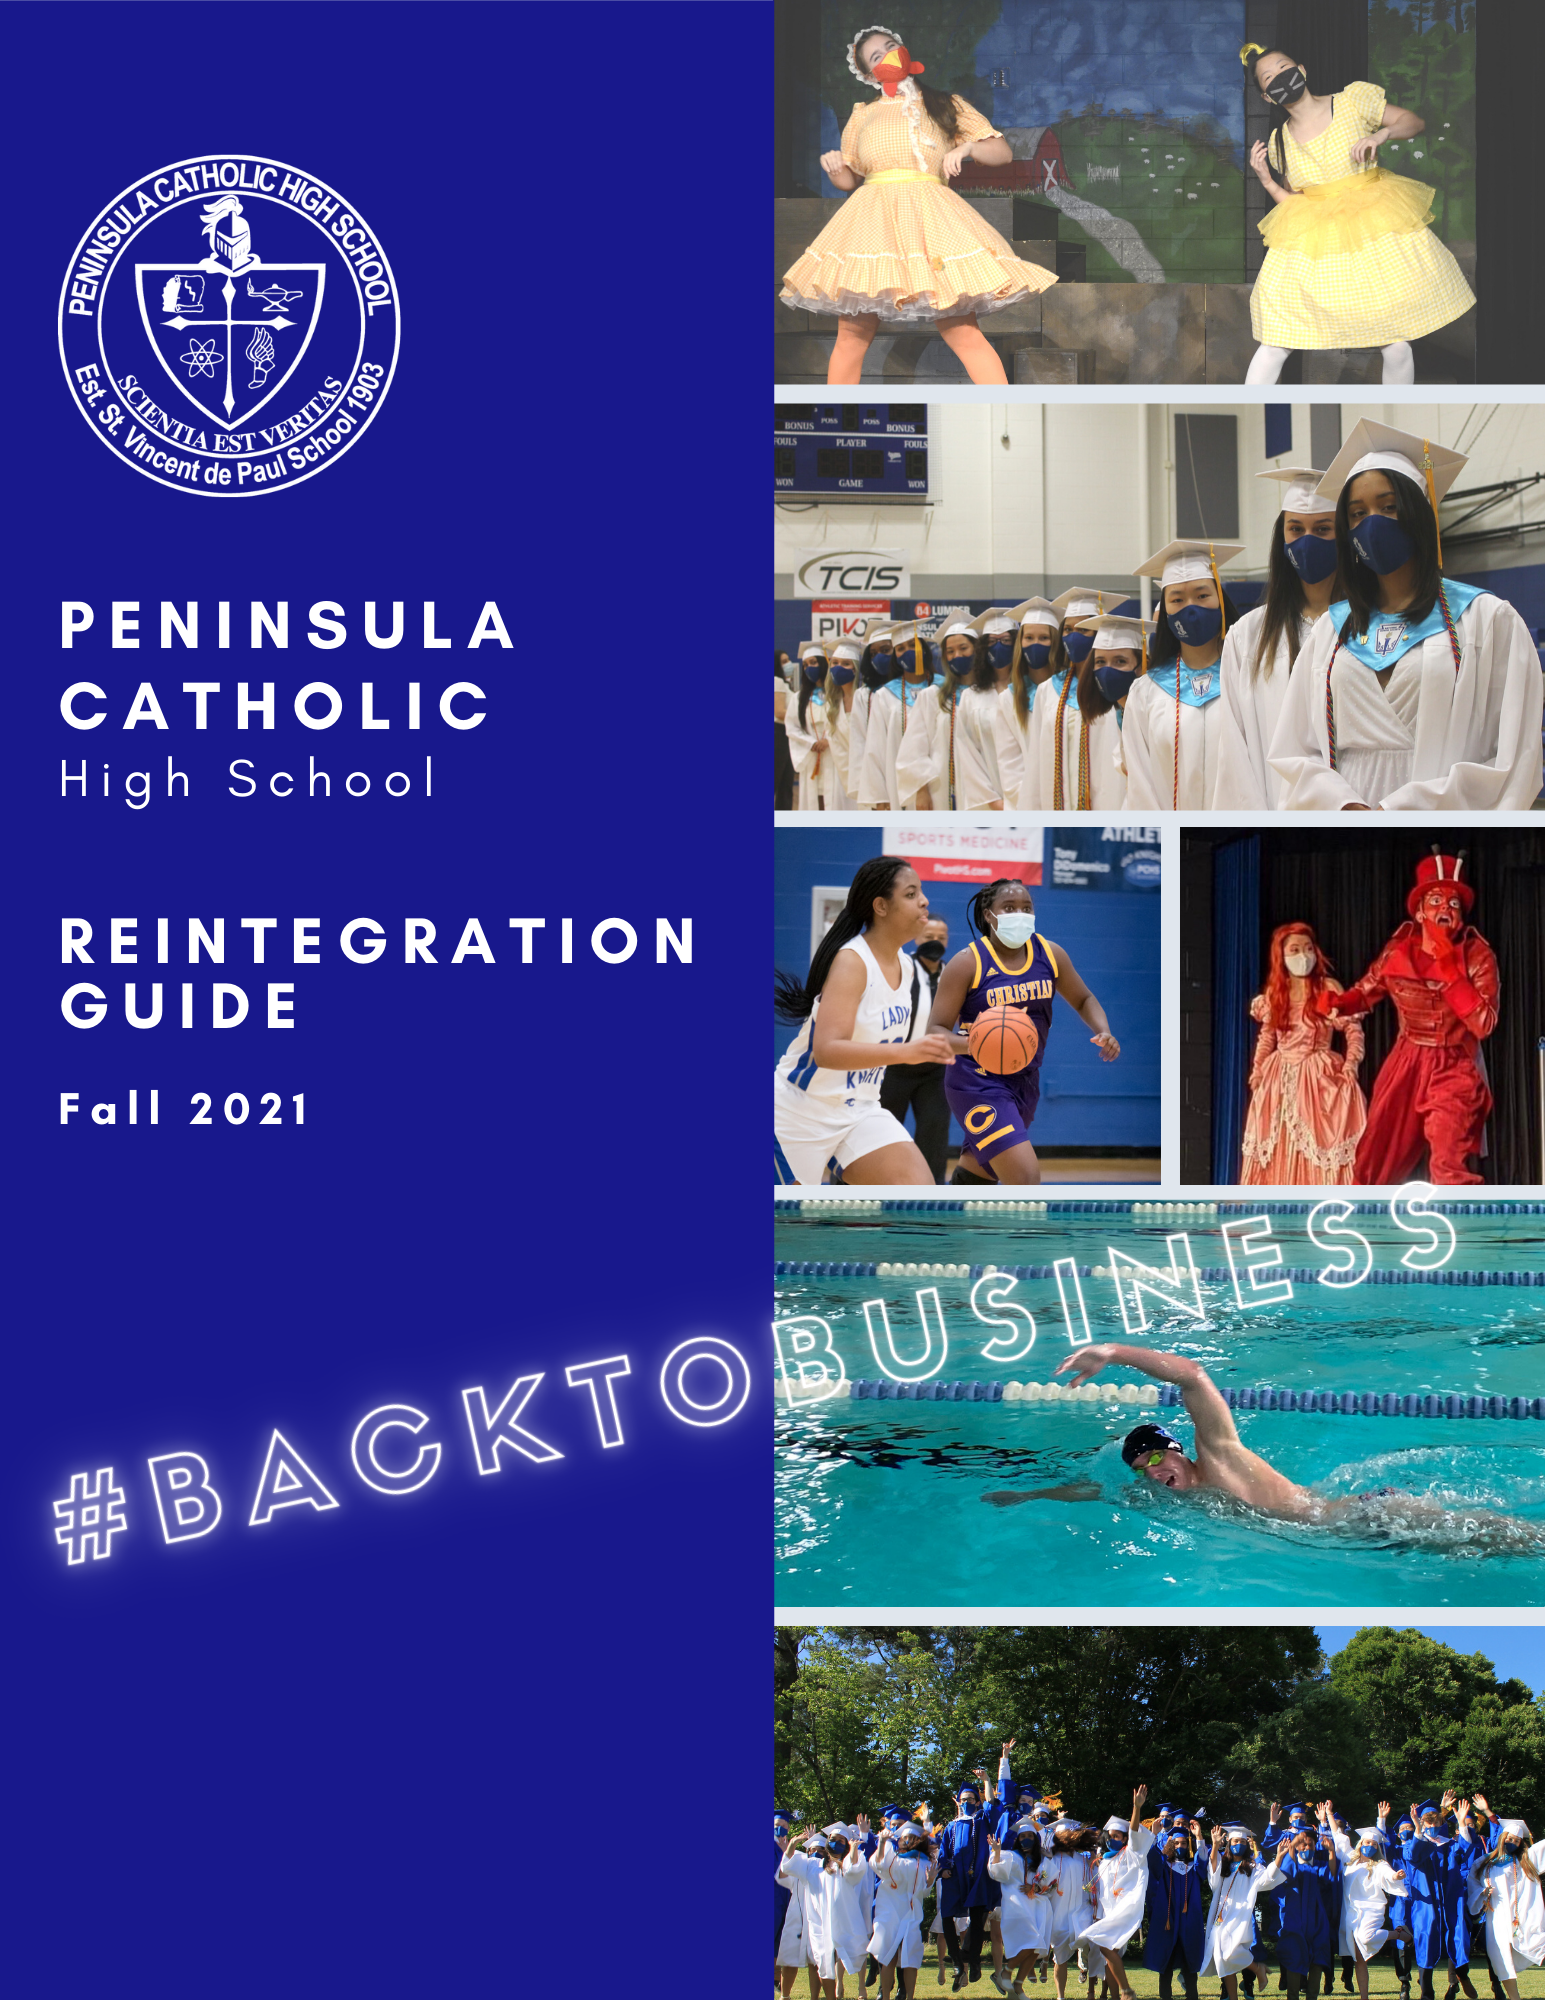 https://www.peninsulacatholic.org/editoruploads/files/PCHS_Reintegration_Guide_2021.pdf